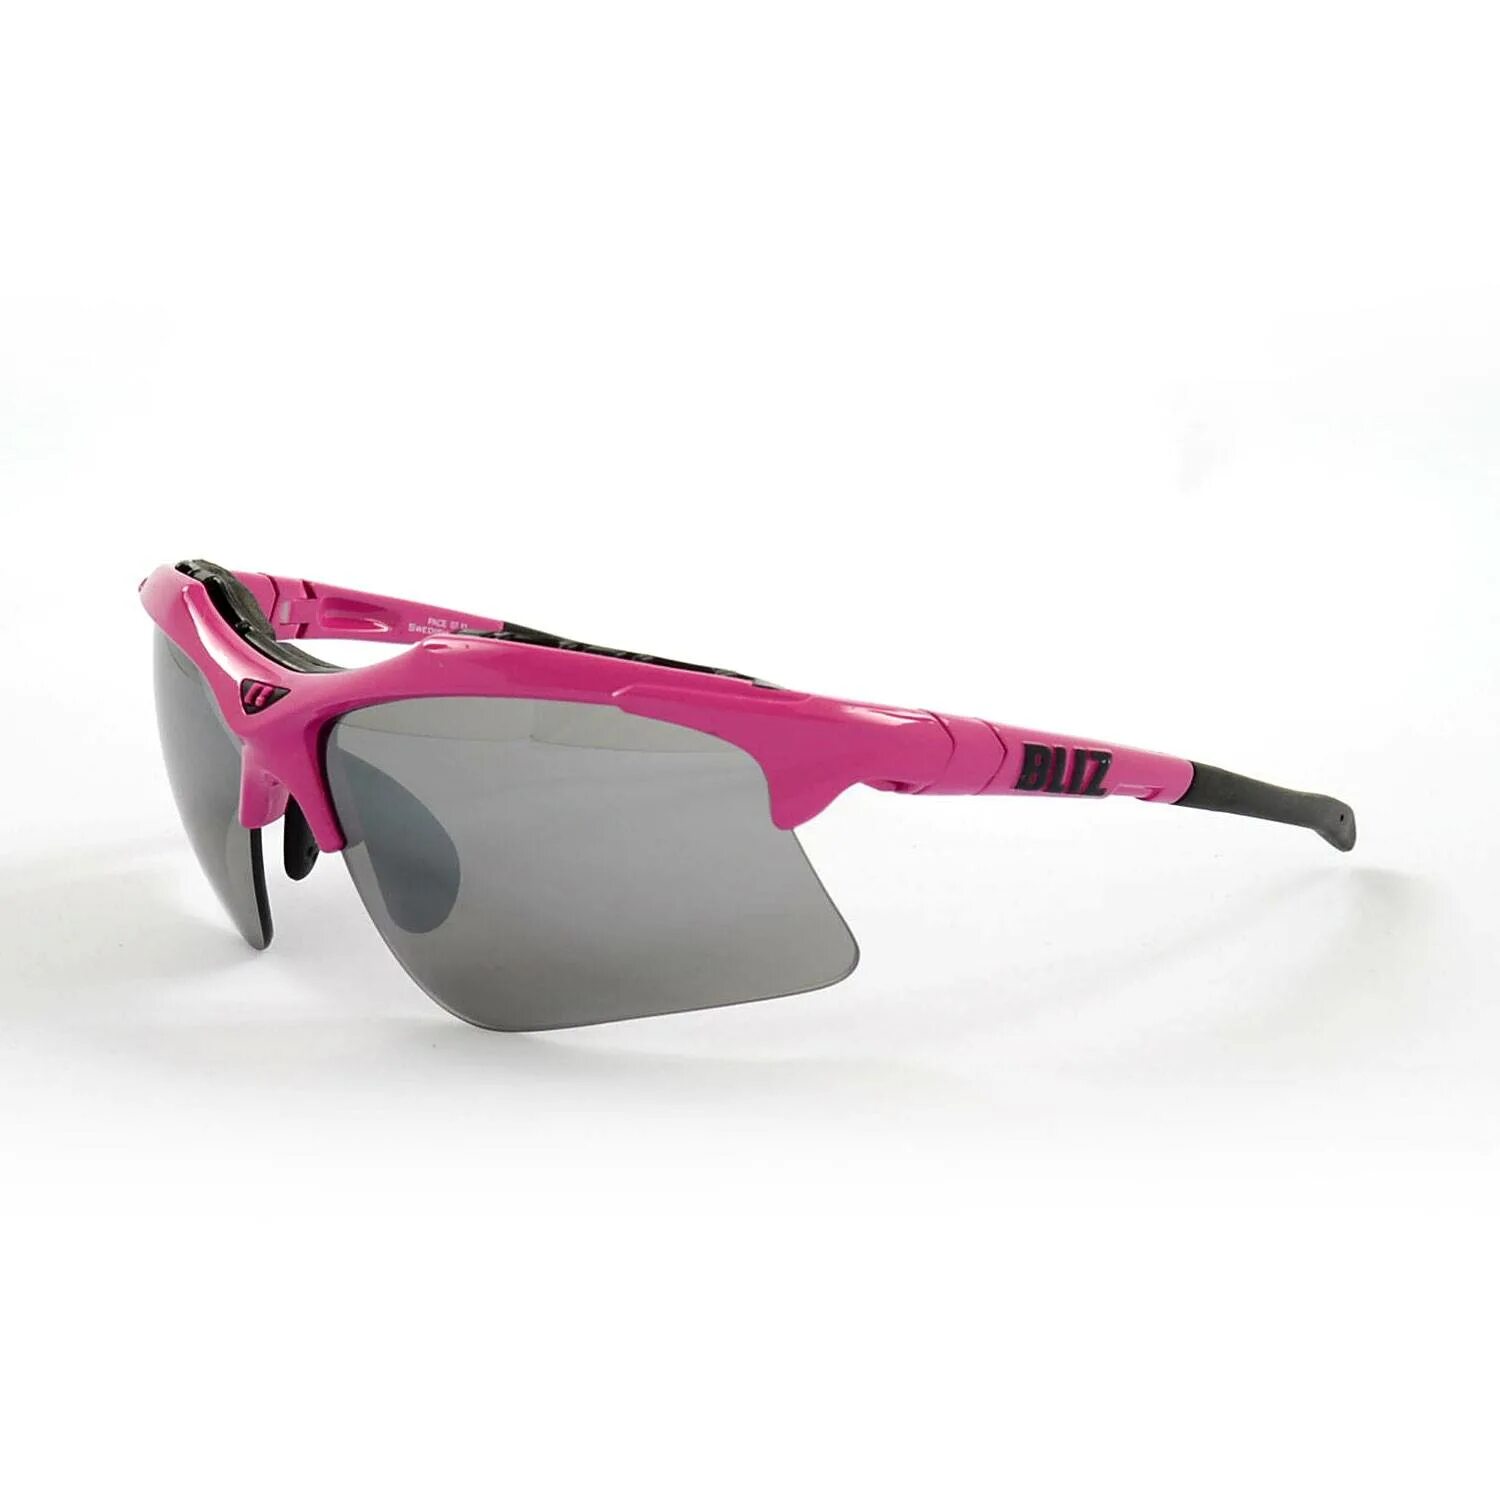 Очки Bliz Breeze. Очки Bliz Active Speed Pink 9061-41. Лыжные очки Bliz. Bliz Fusion. Blitz очки